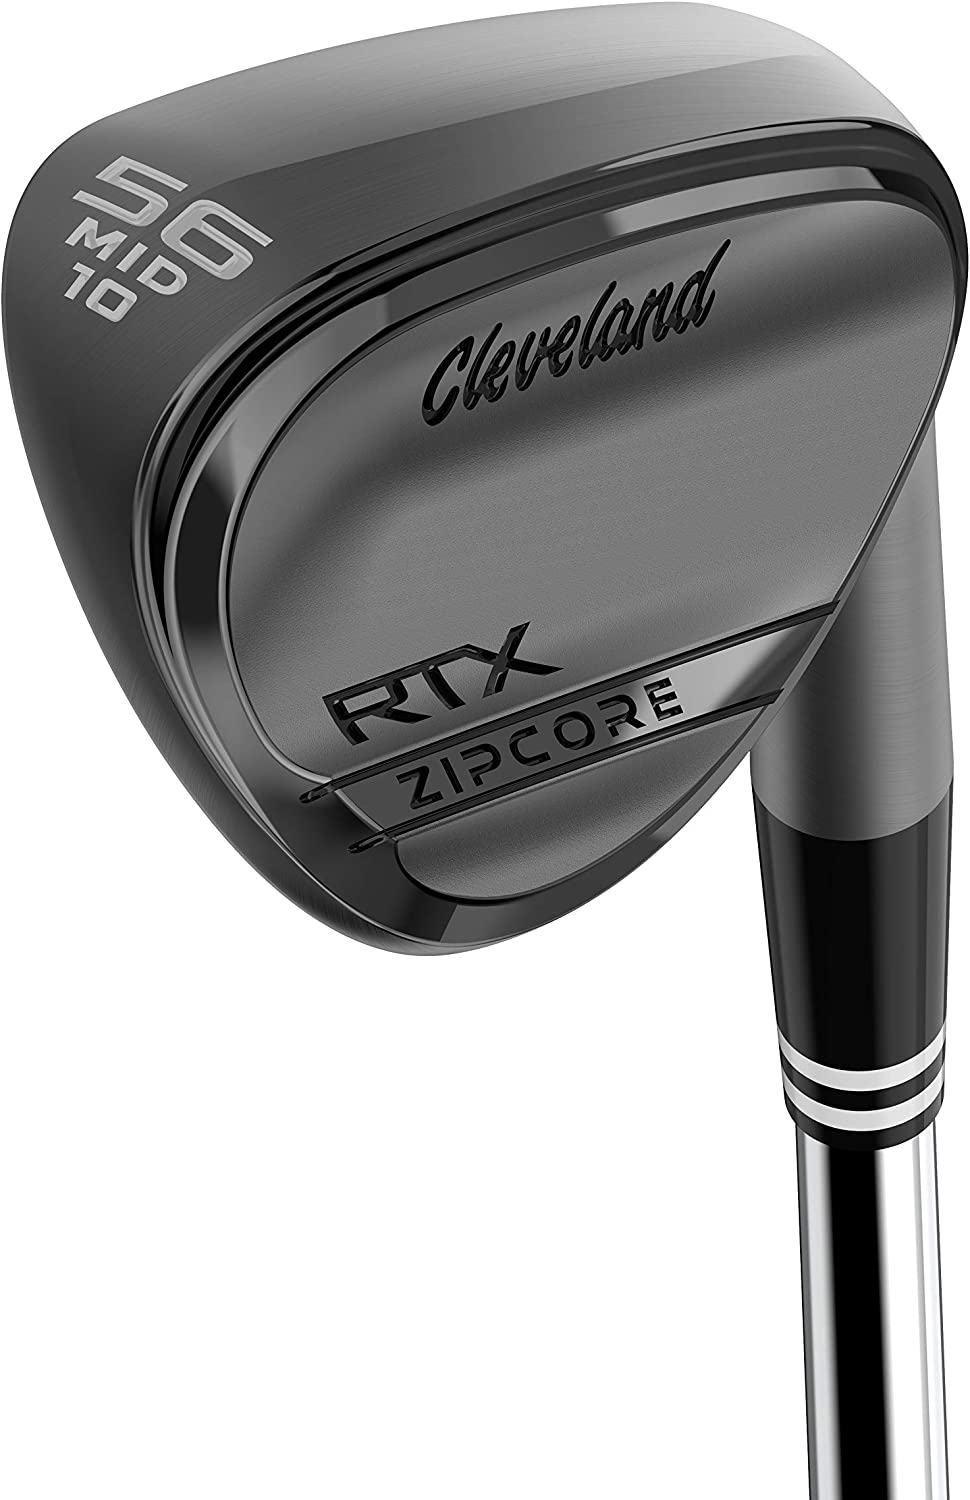 Cleveland Golf RTX ZipCore Black Satin Wedge